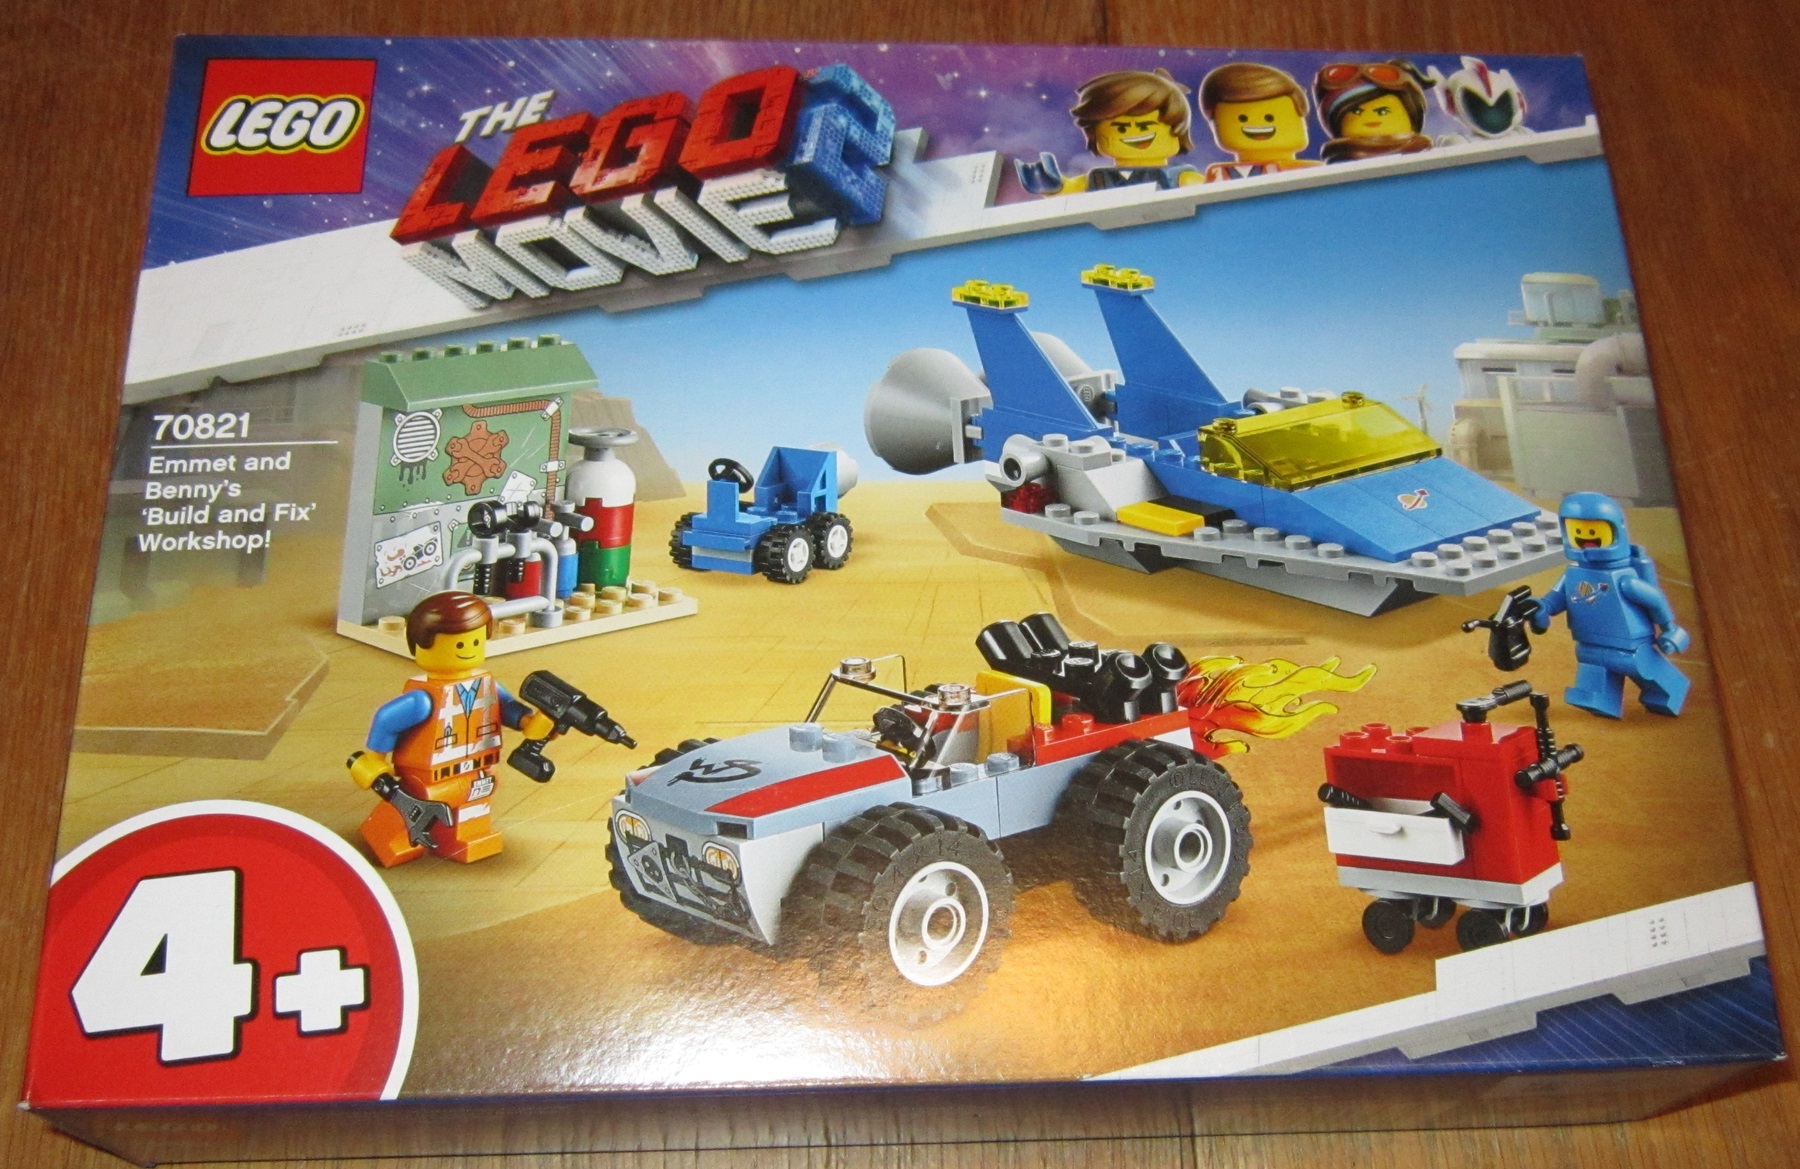 0010 Lego 70821 The Lego Movie